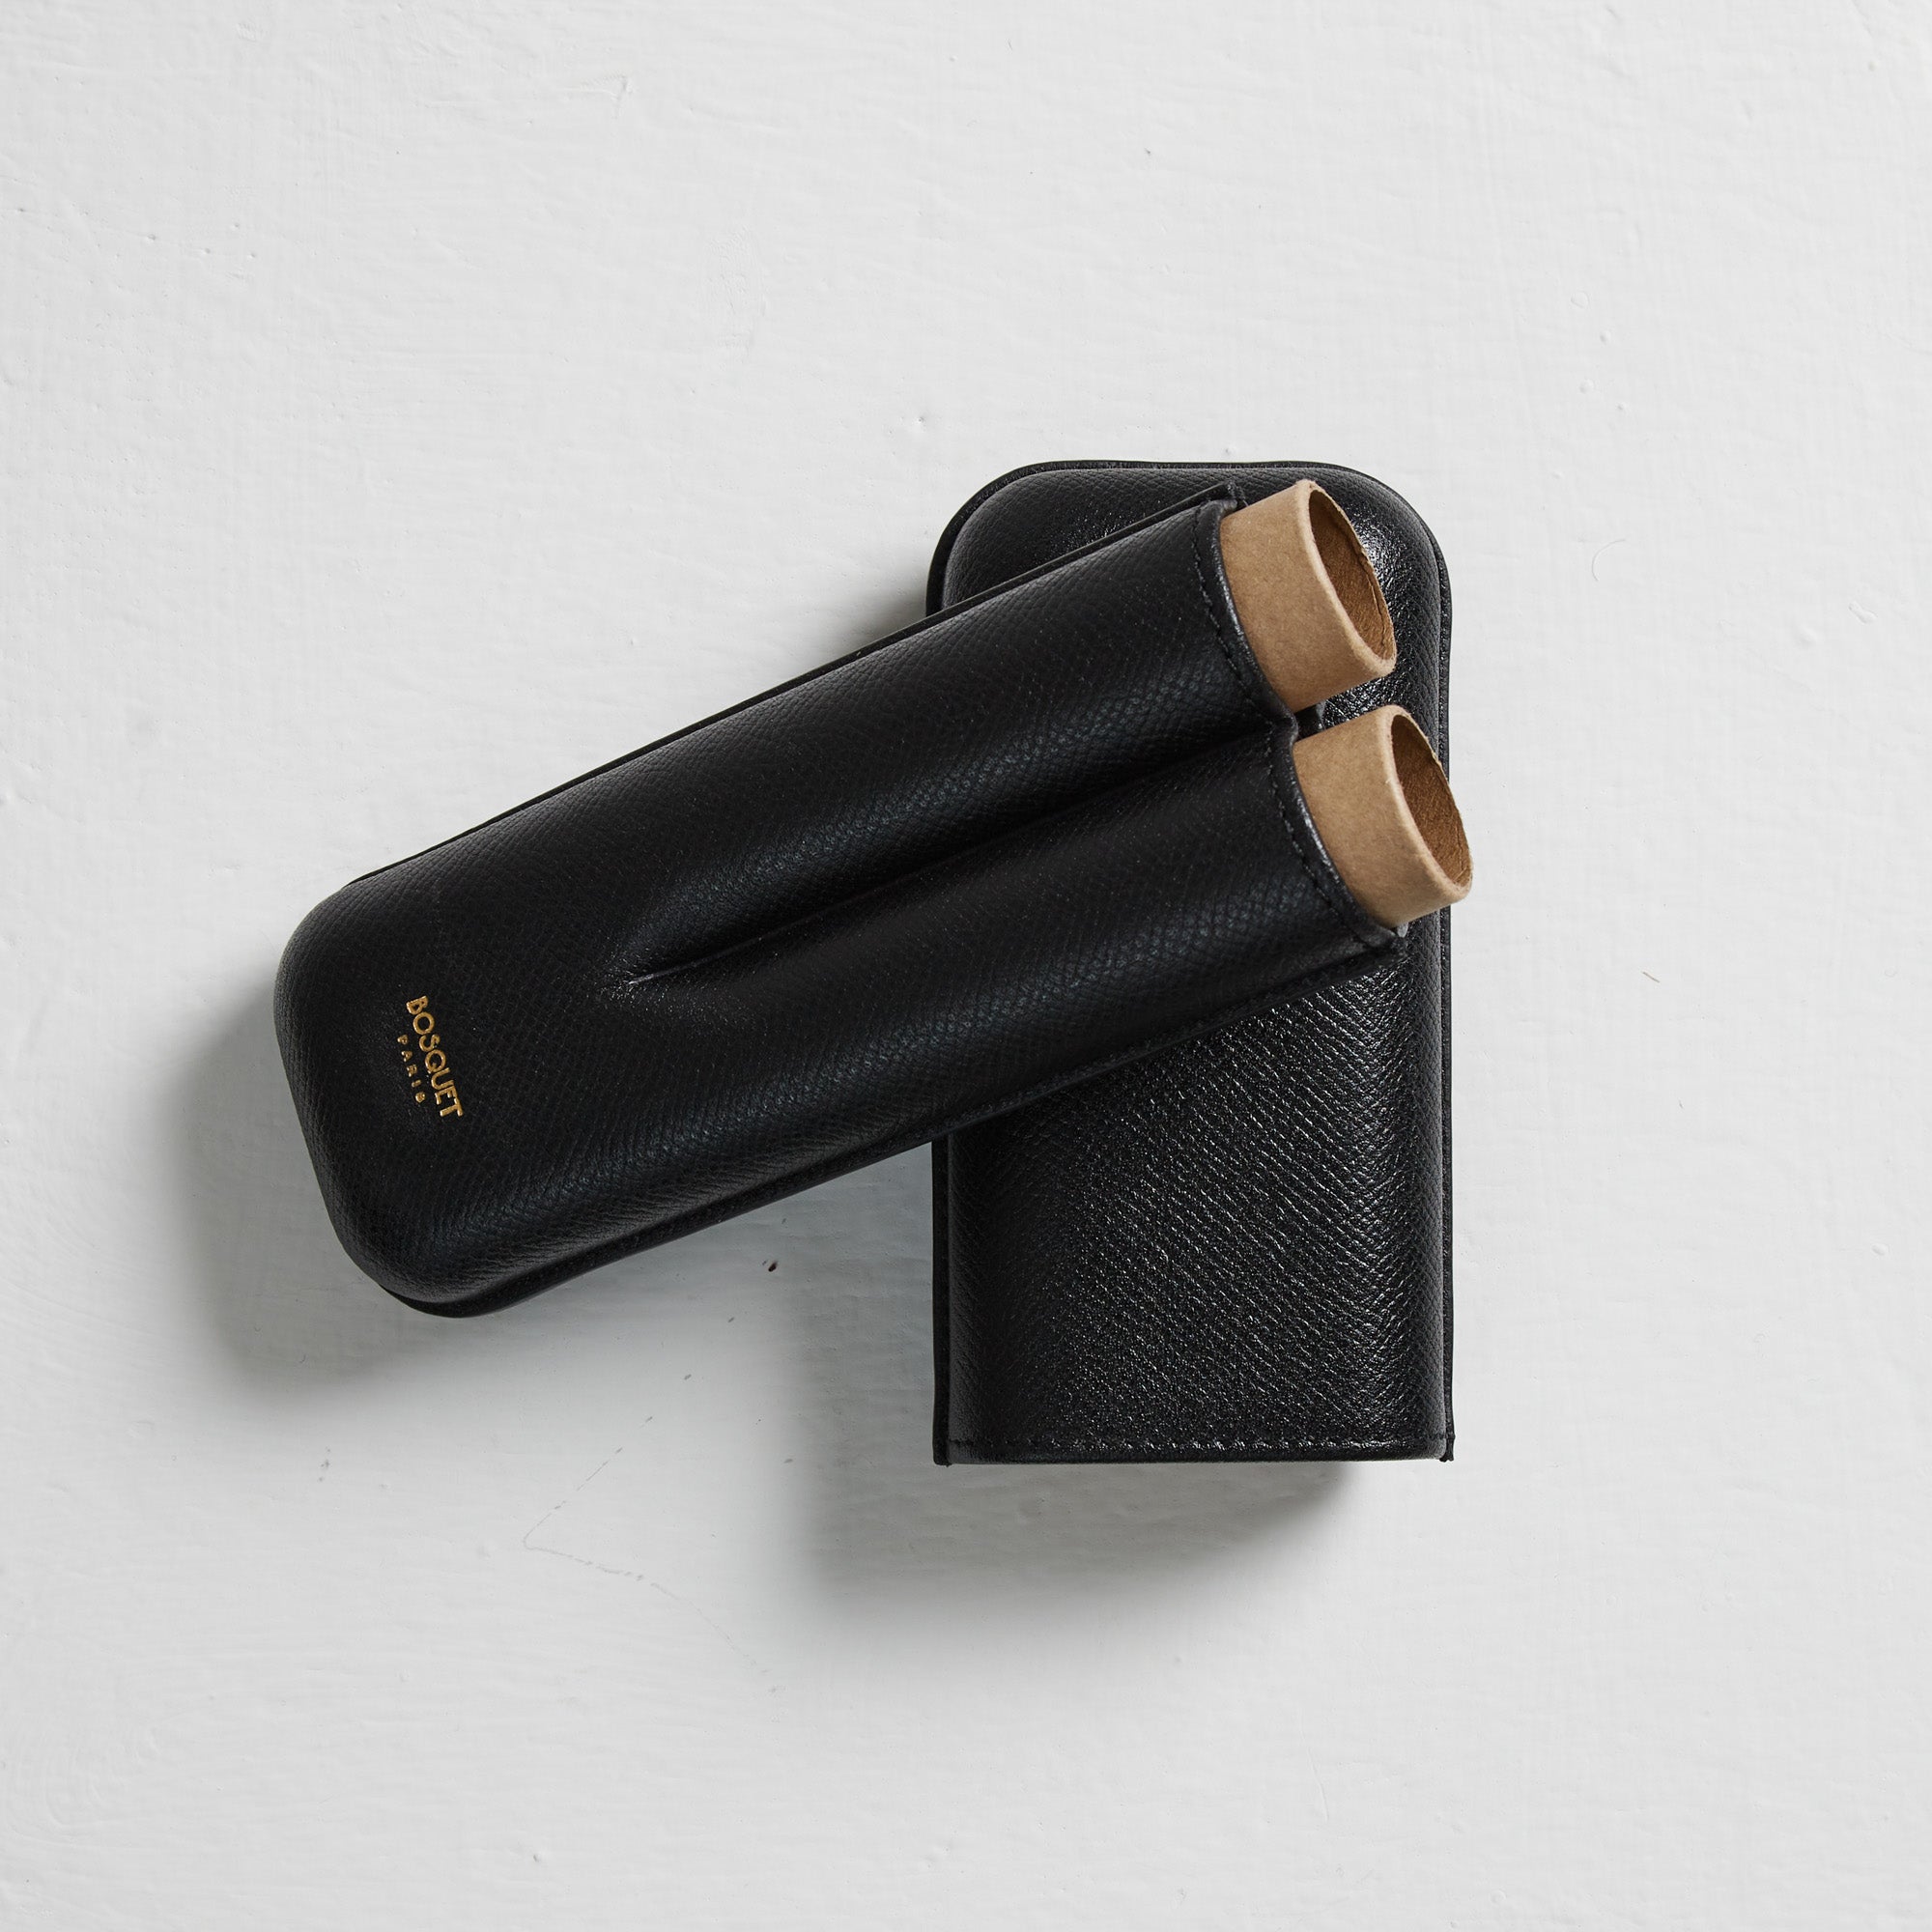 Bosquet Smooth Black Leather Cigar Case